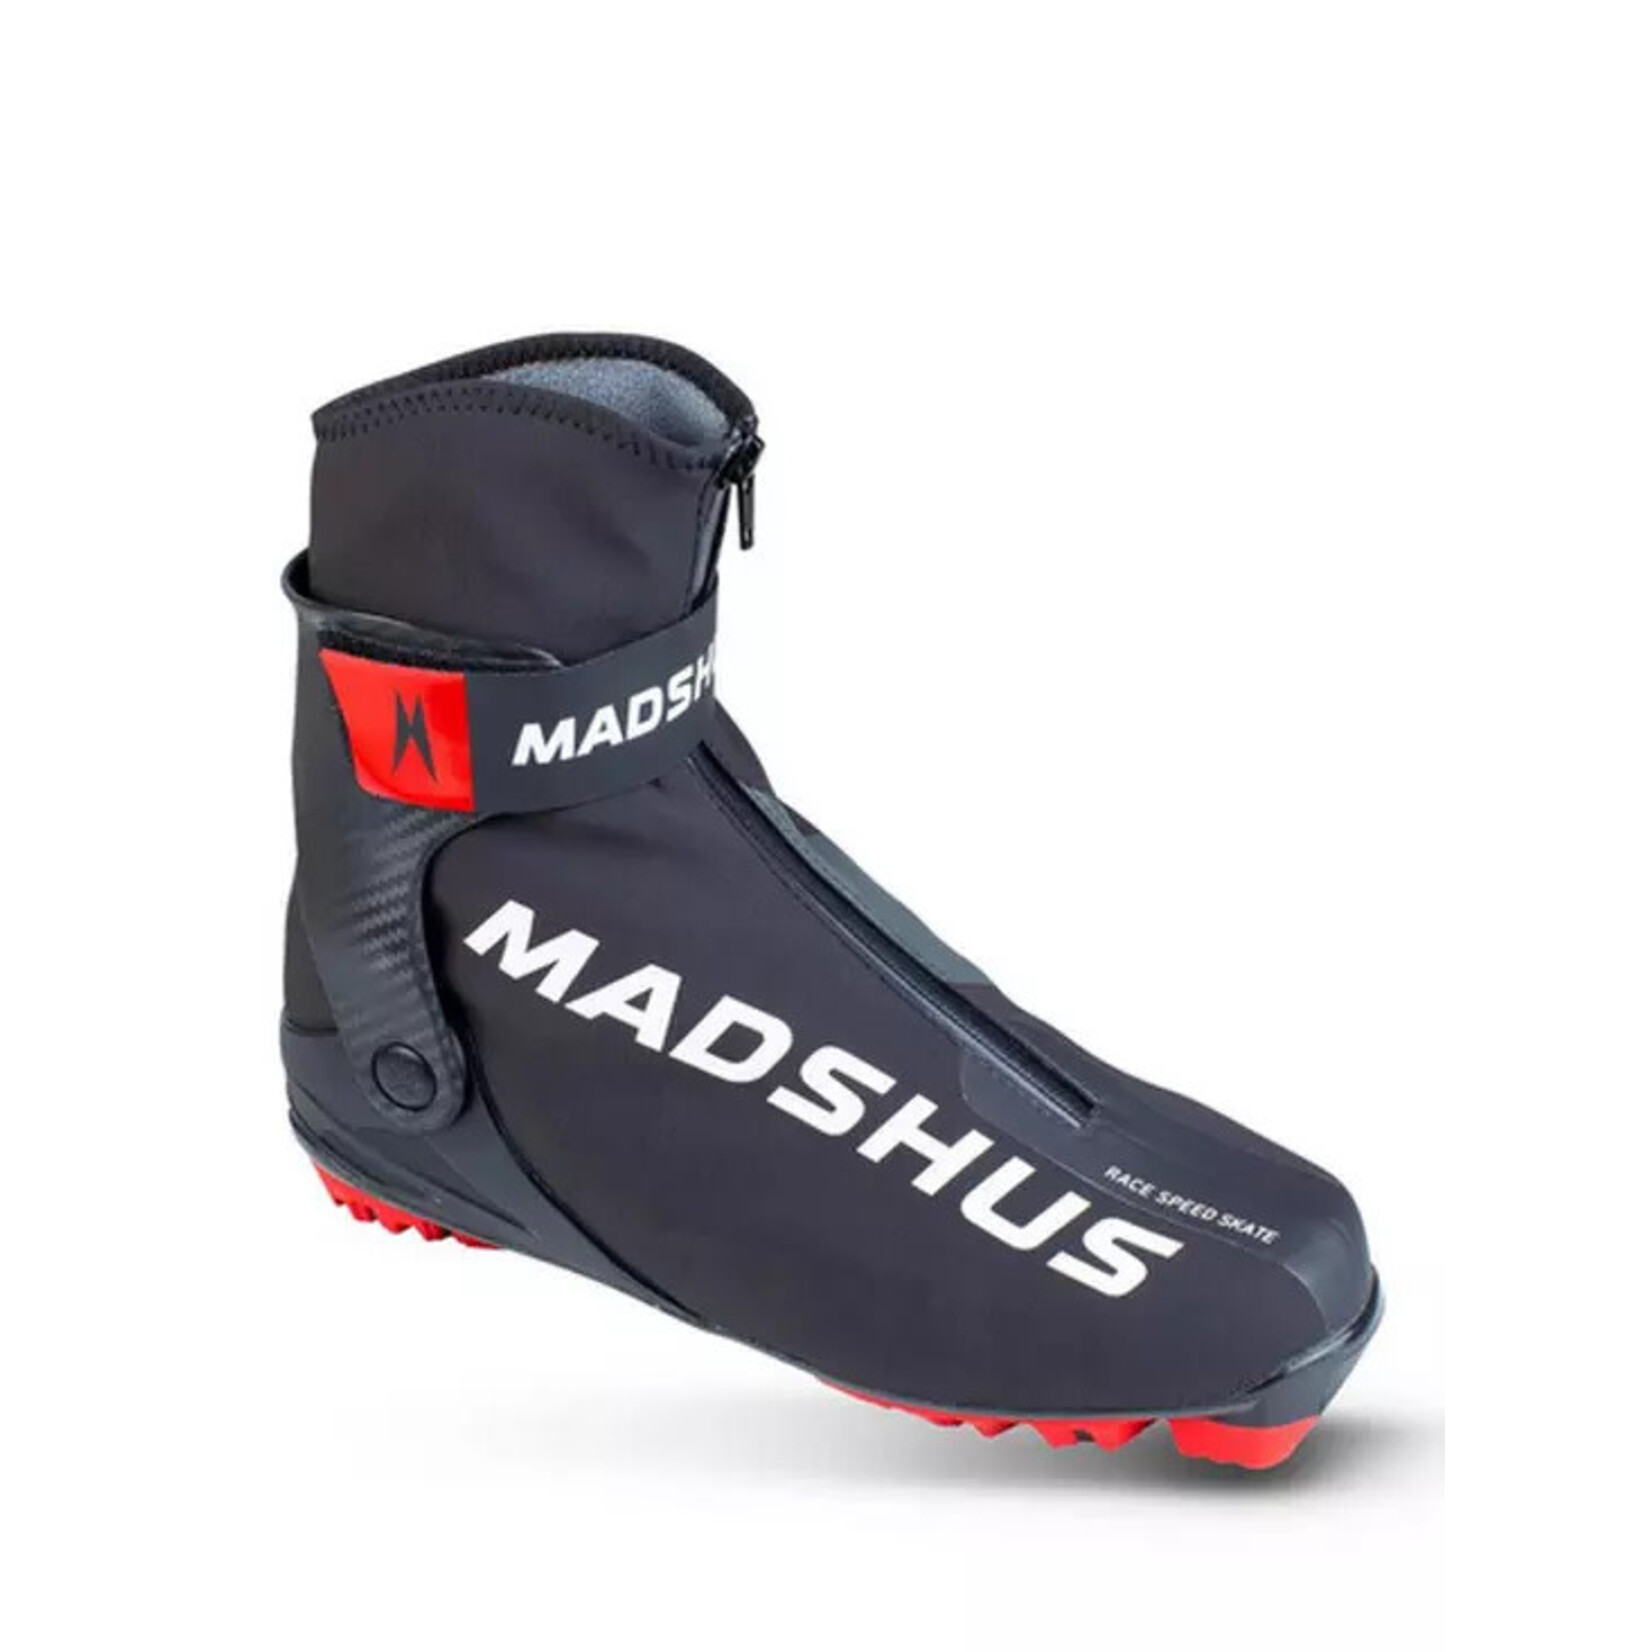 Madshus Race Speed skate (Bottes de ski de fond skating)